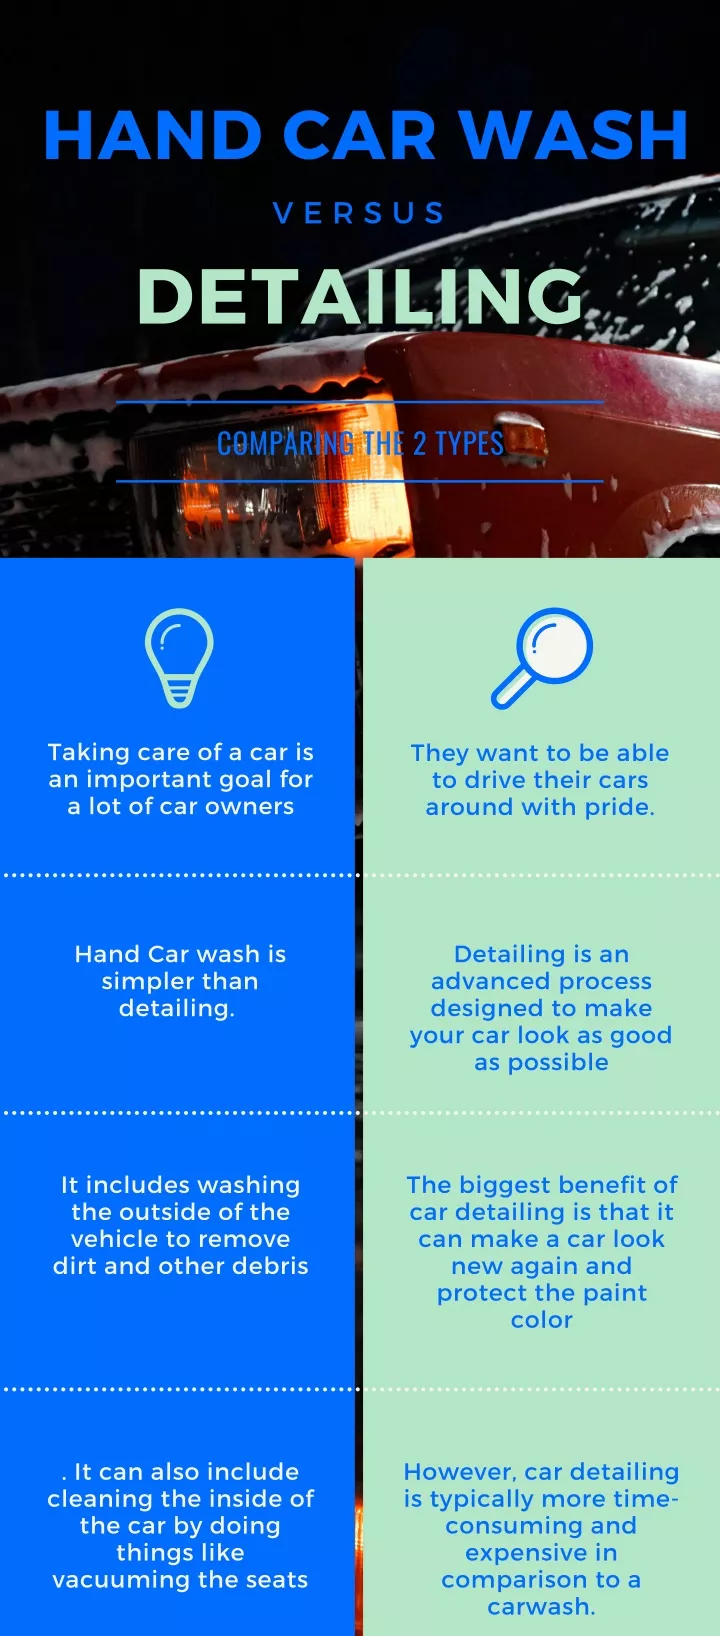 Hand car wash vs detailing